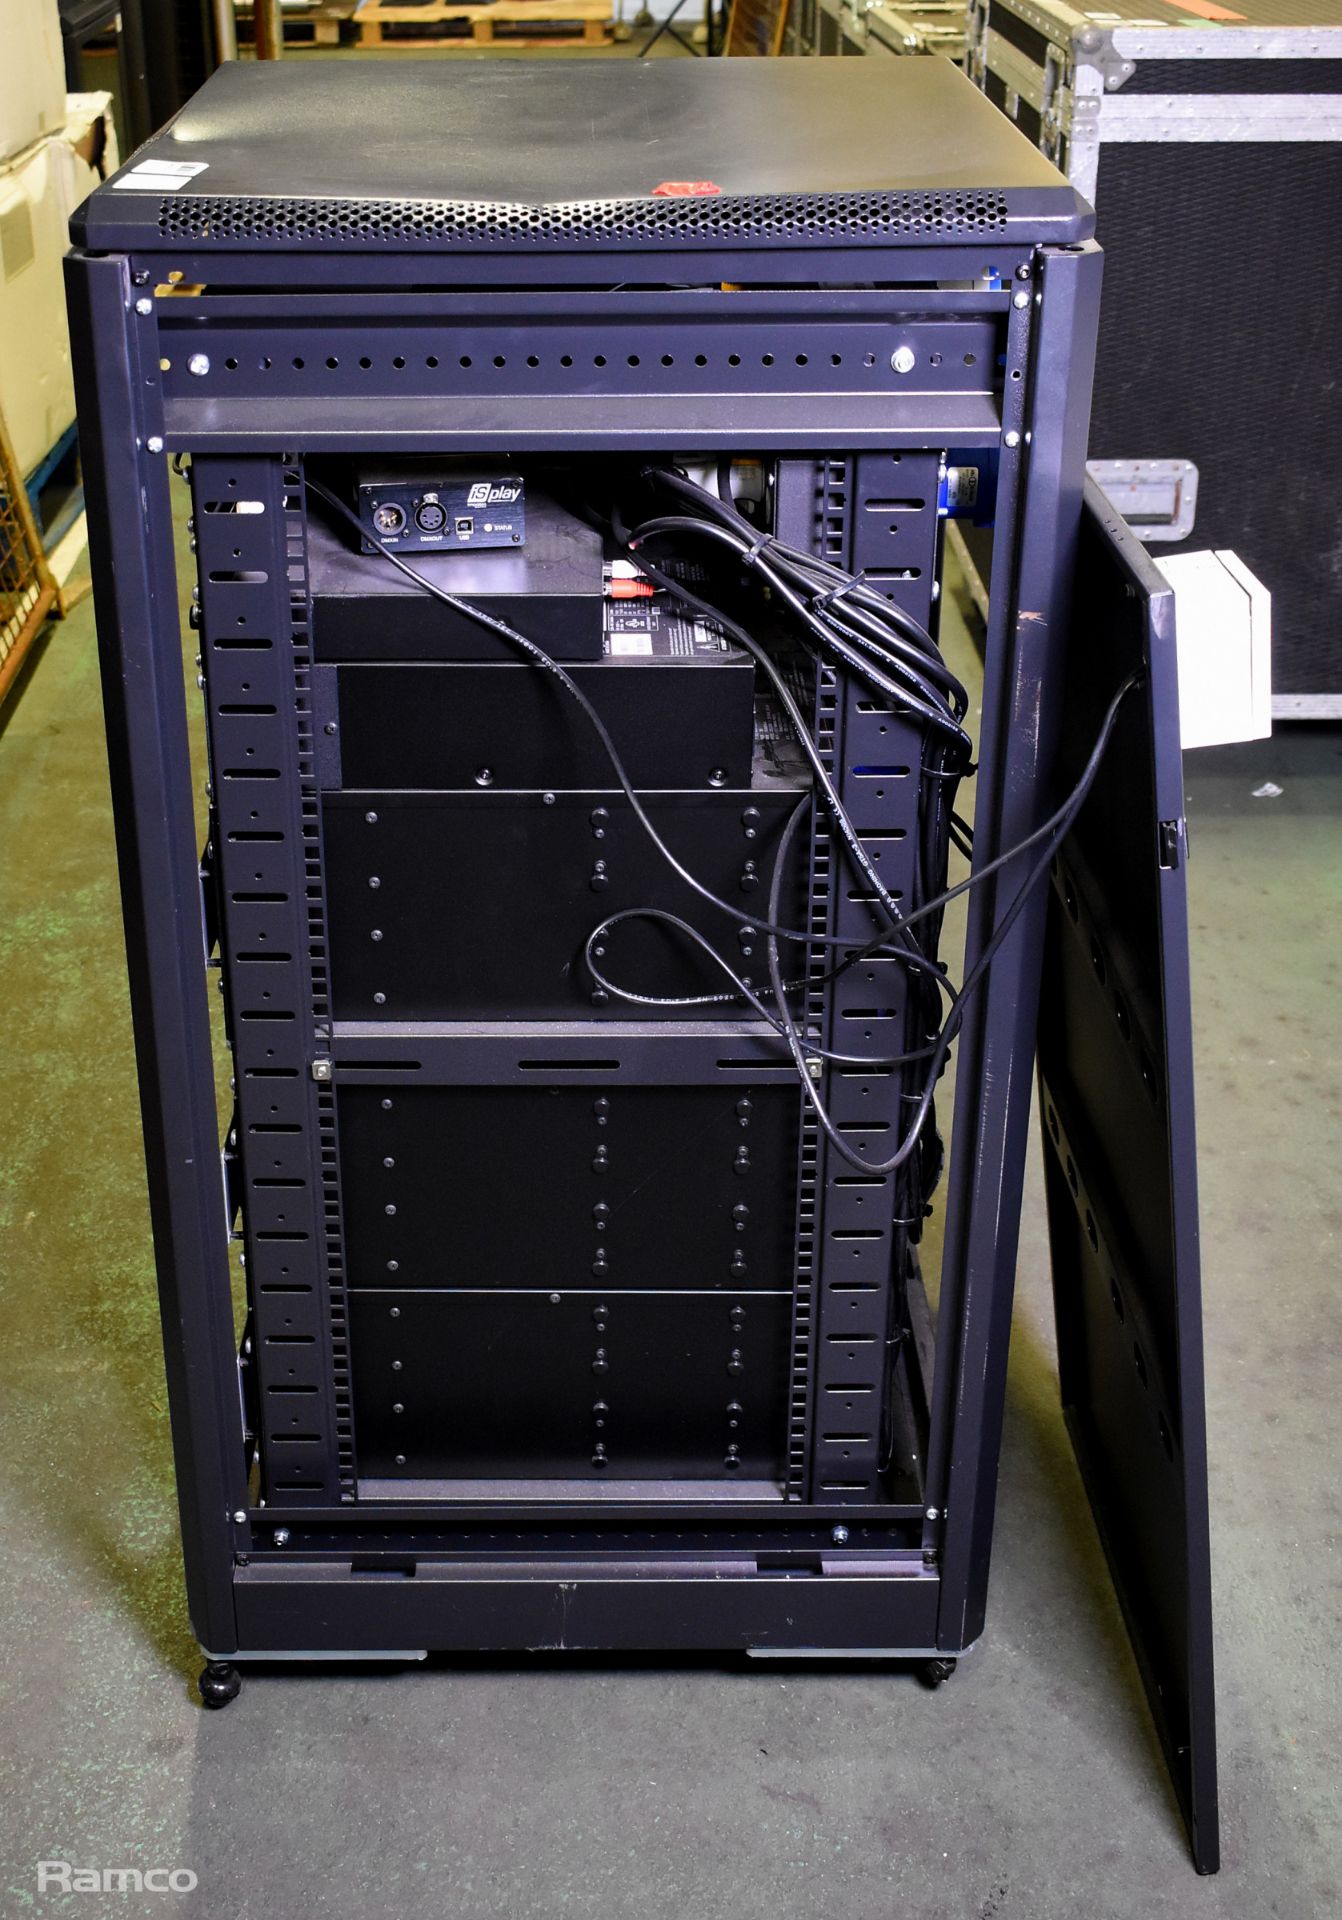 19 inch electronic instrument rack - Black - see description for details - Image 7 of 14